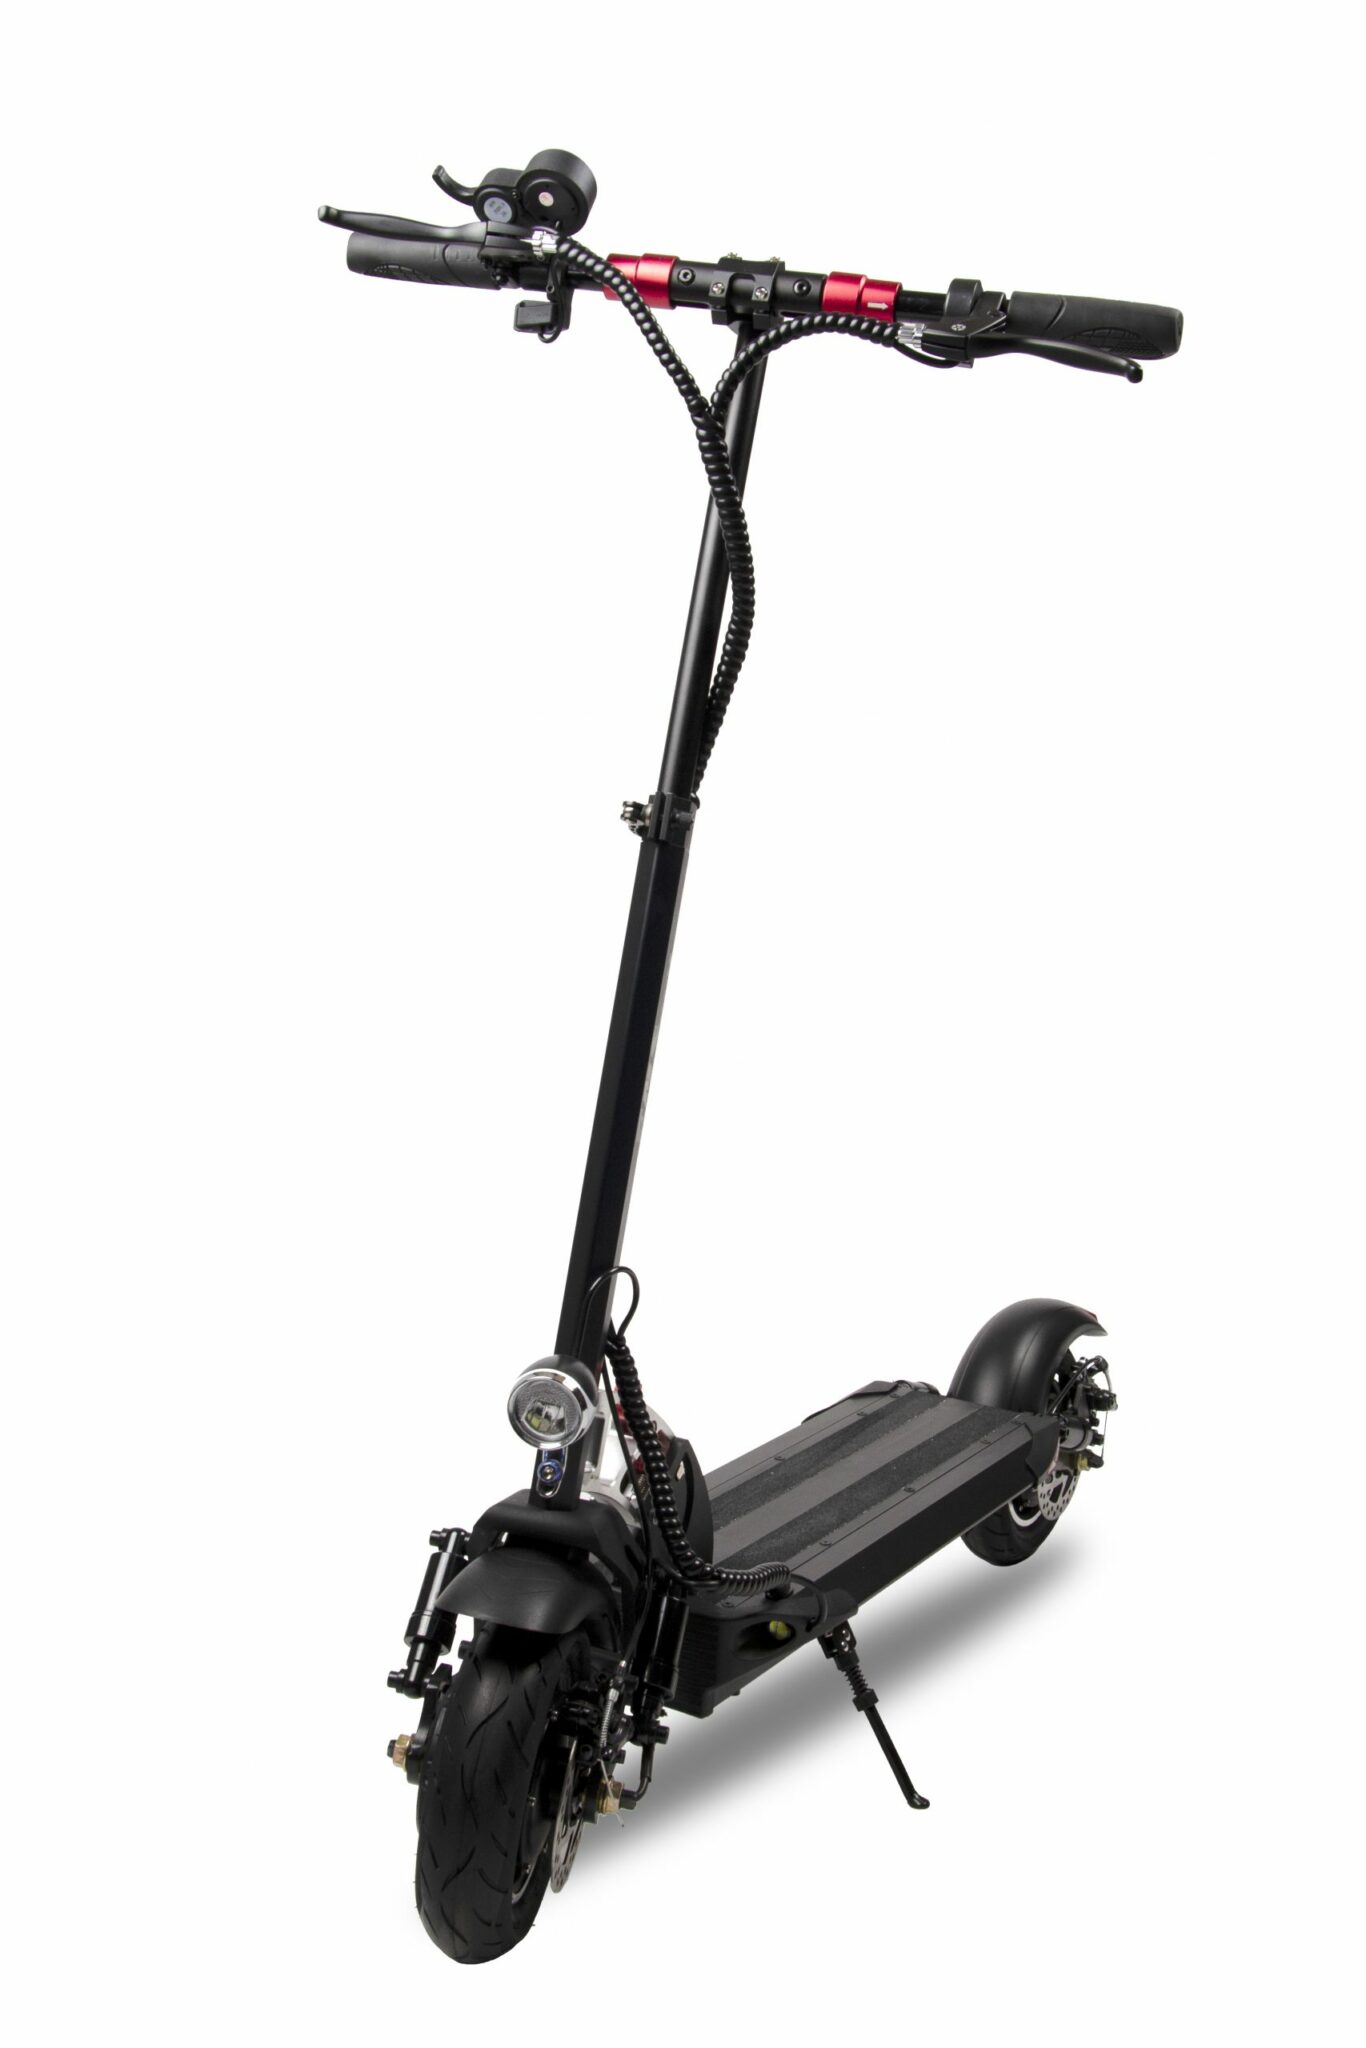 Elektrinis paspirtukas EMScooter Extreme X5 | rs-tech.lt nuotr.